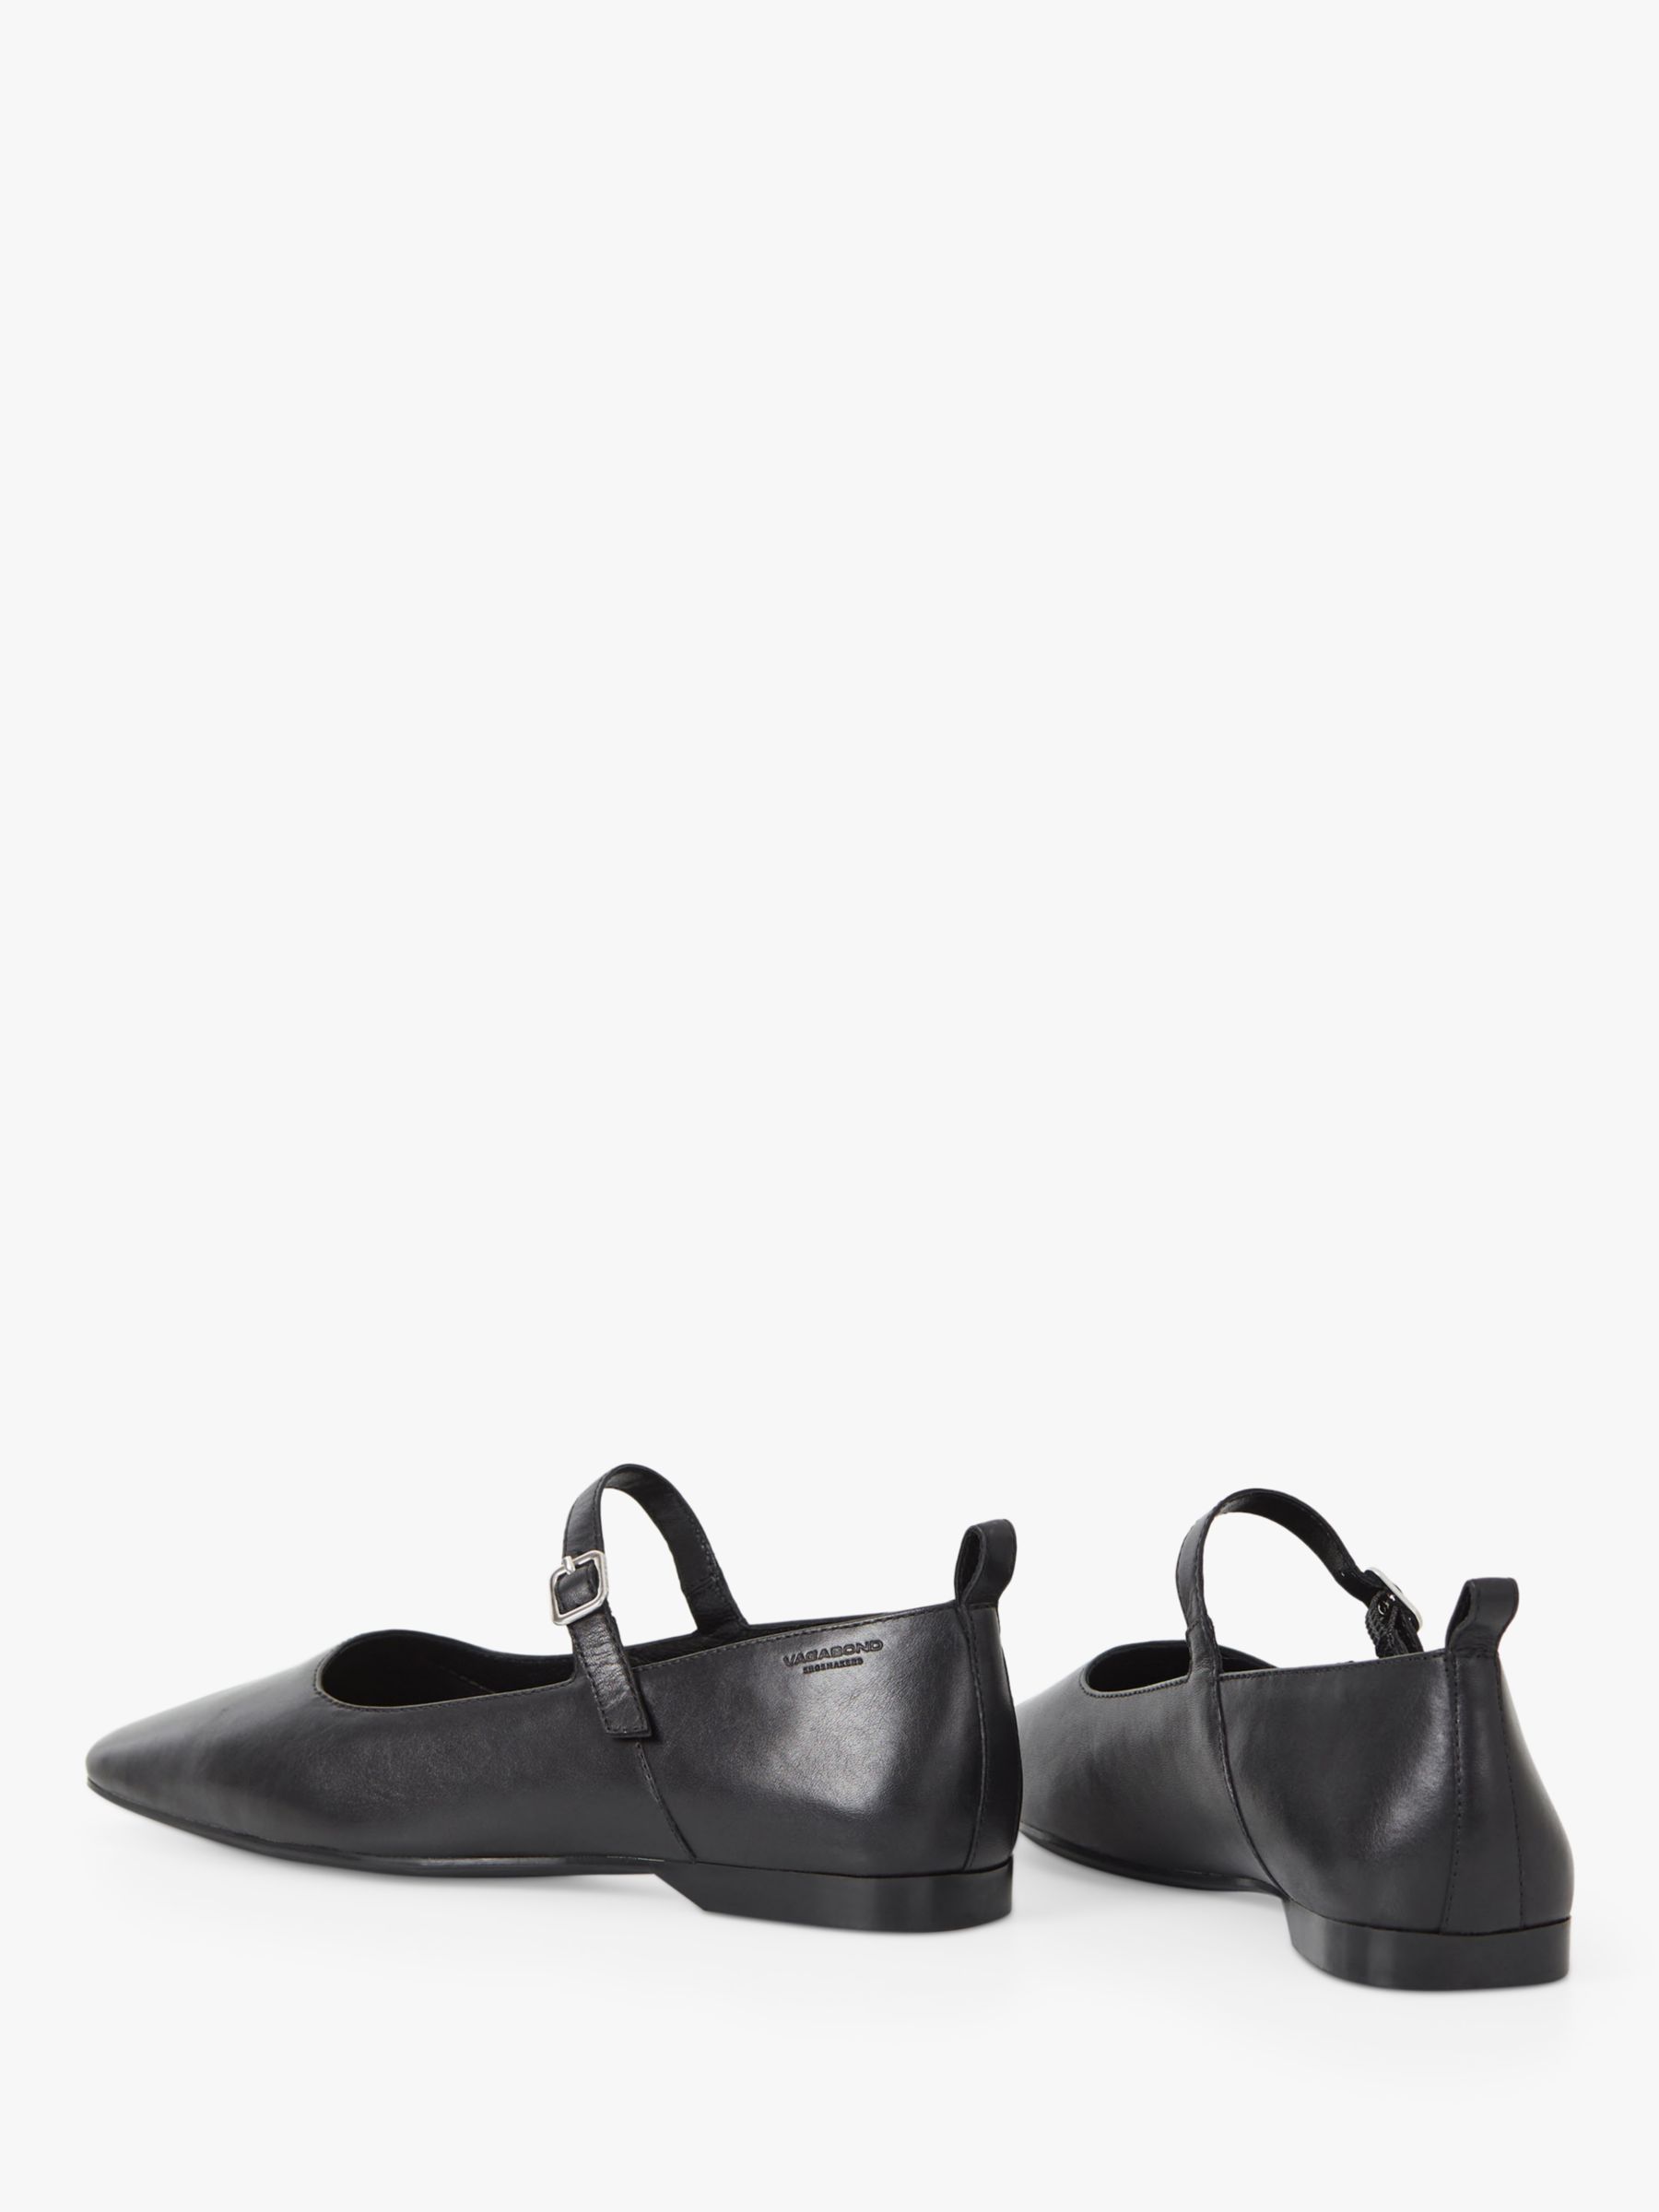 Vagabond Shoemakers Delia Leather Flat Mary Jane Shoes, Black, 6